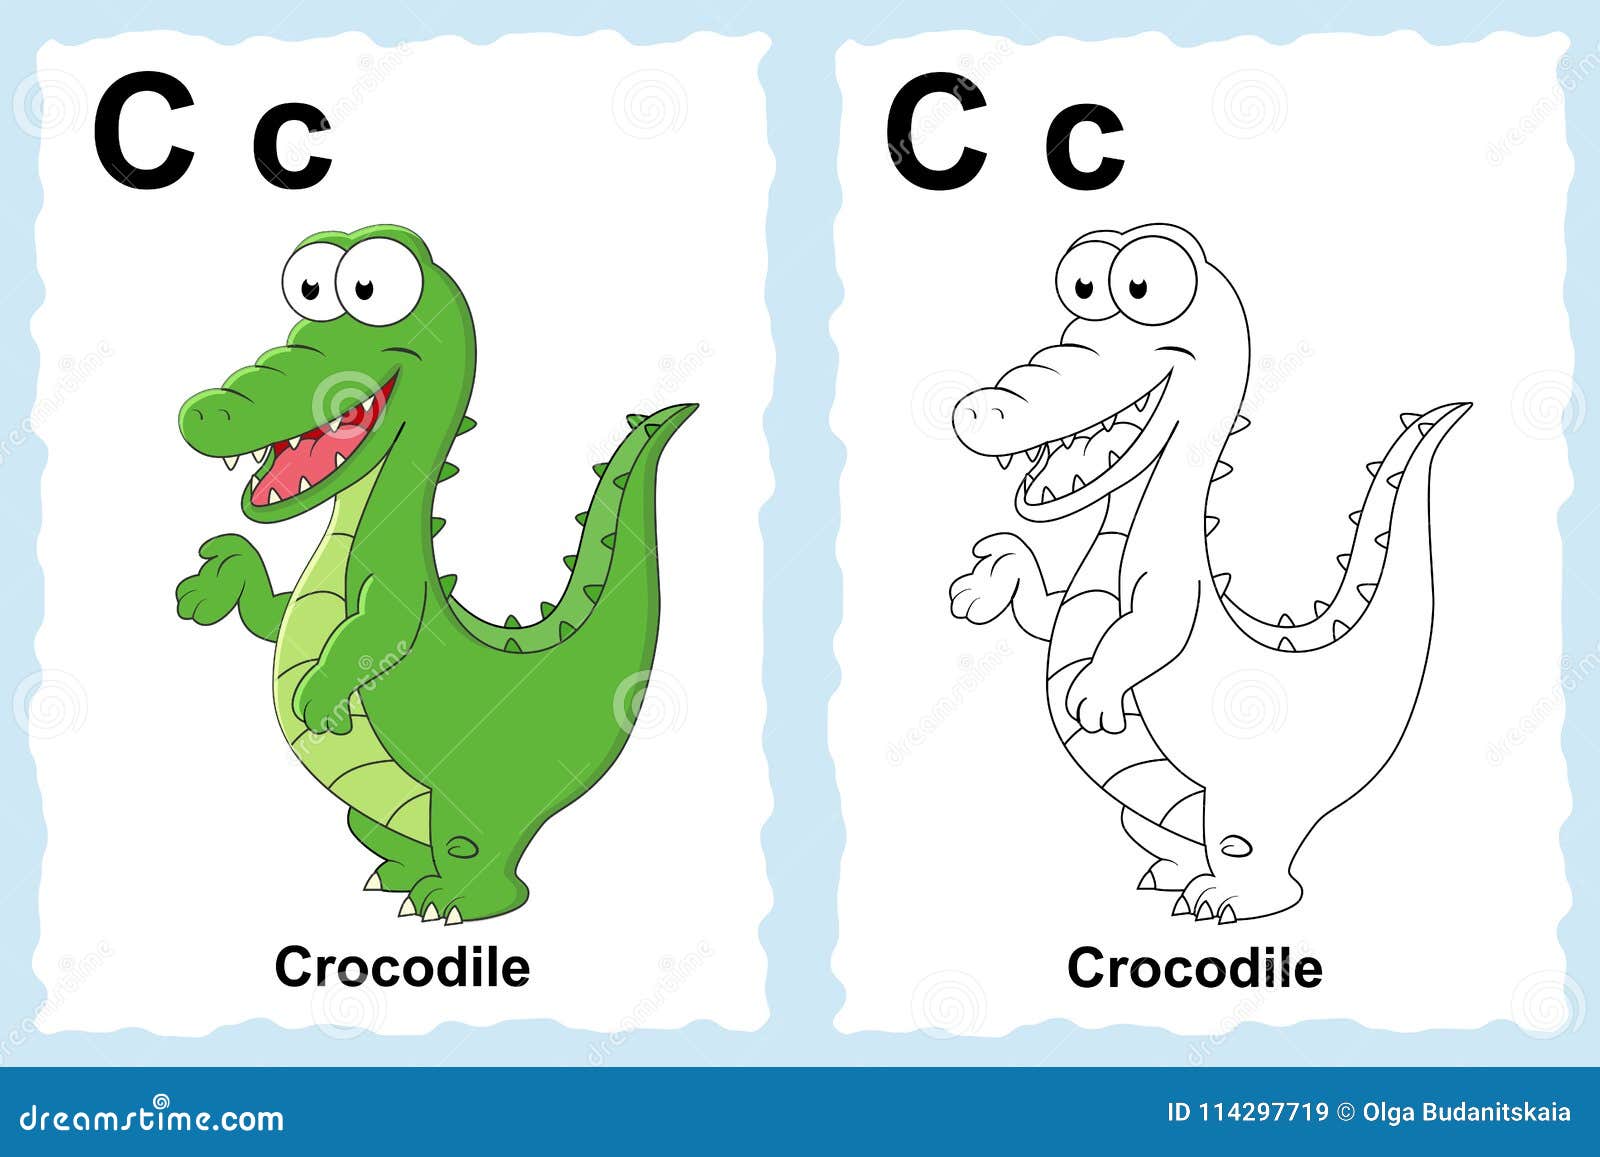 Схема слова крокодил. Буква к крокодил. Крокодильи буквы. Буква б похожа на крокодила. Буква к в форме крокодила.